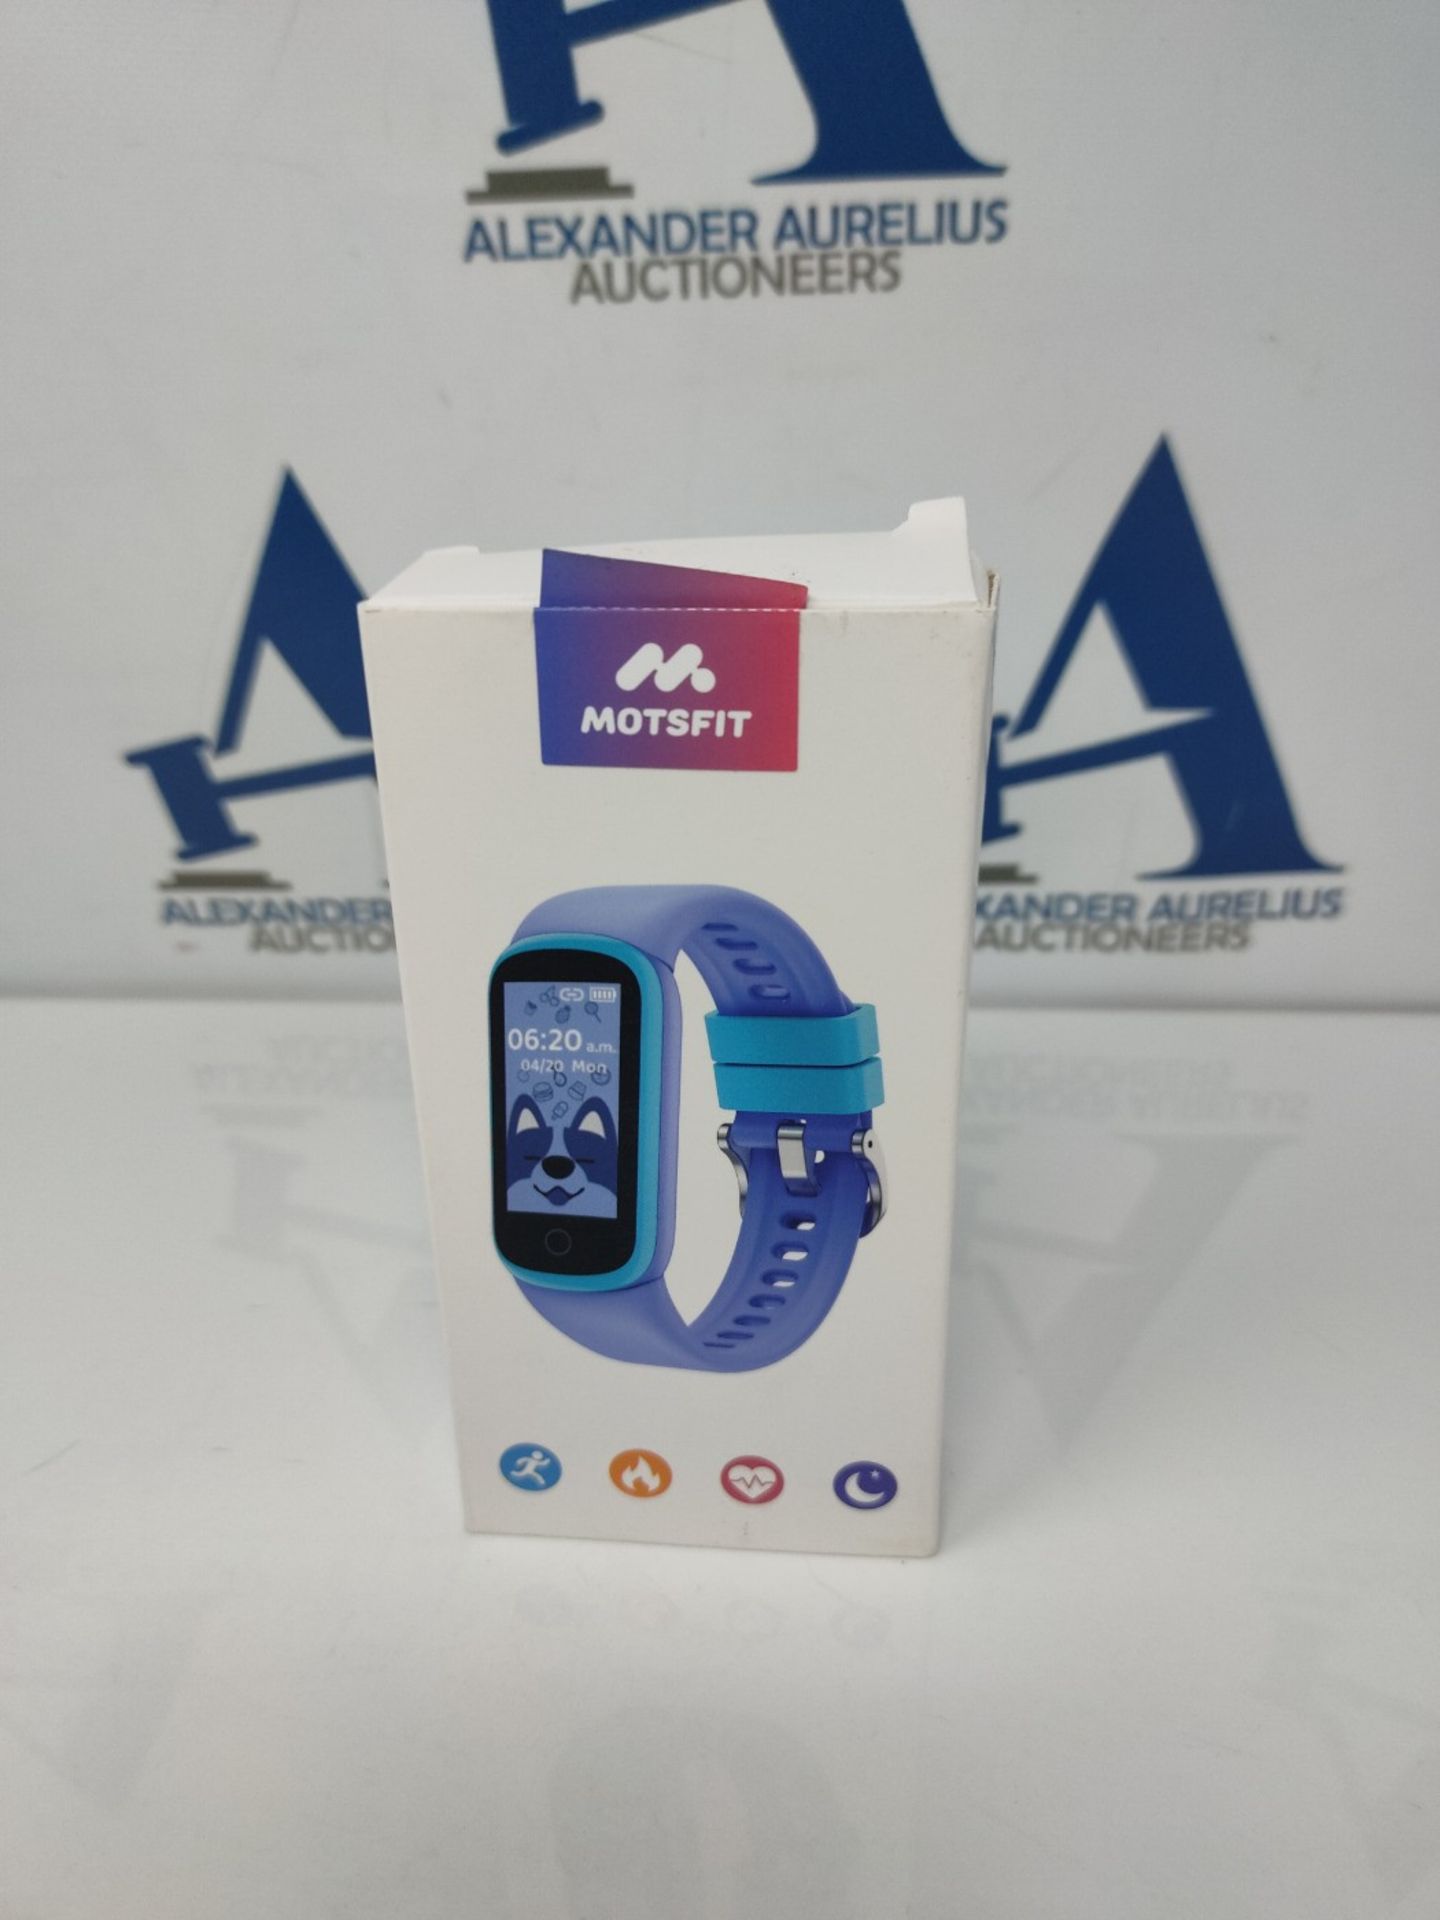 Kids Smart Watch Fitness Tracker - Smartwatch with Heart Rate Blood Pressure Sleep Mon